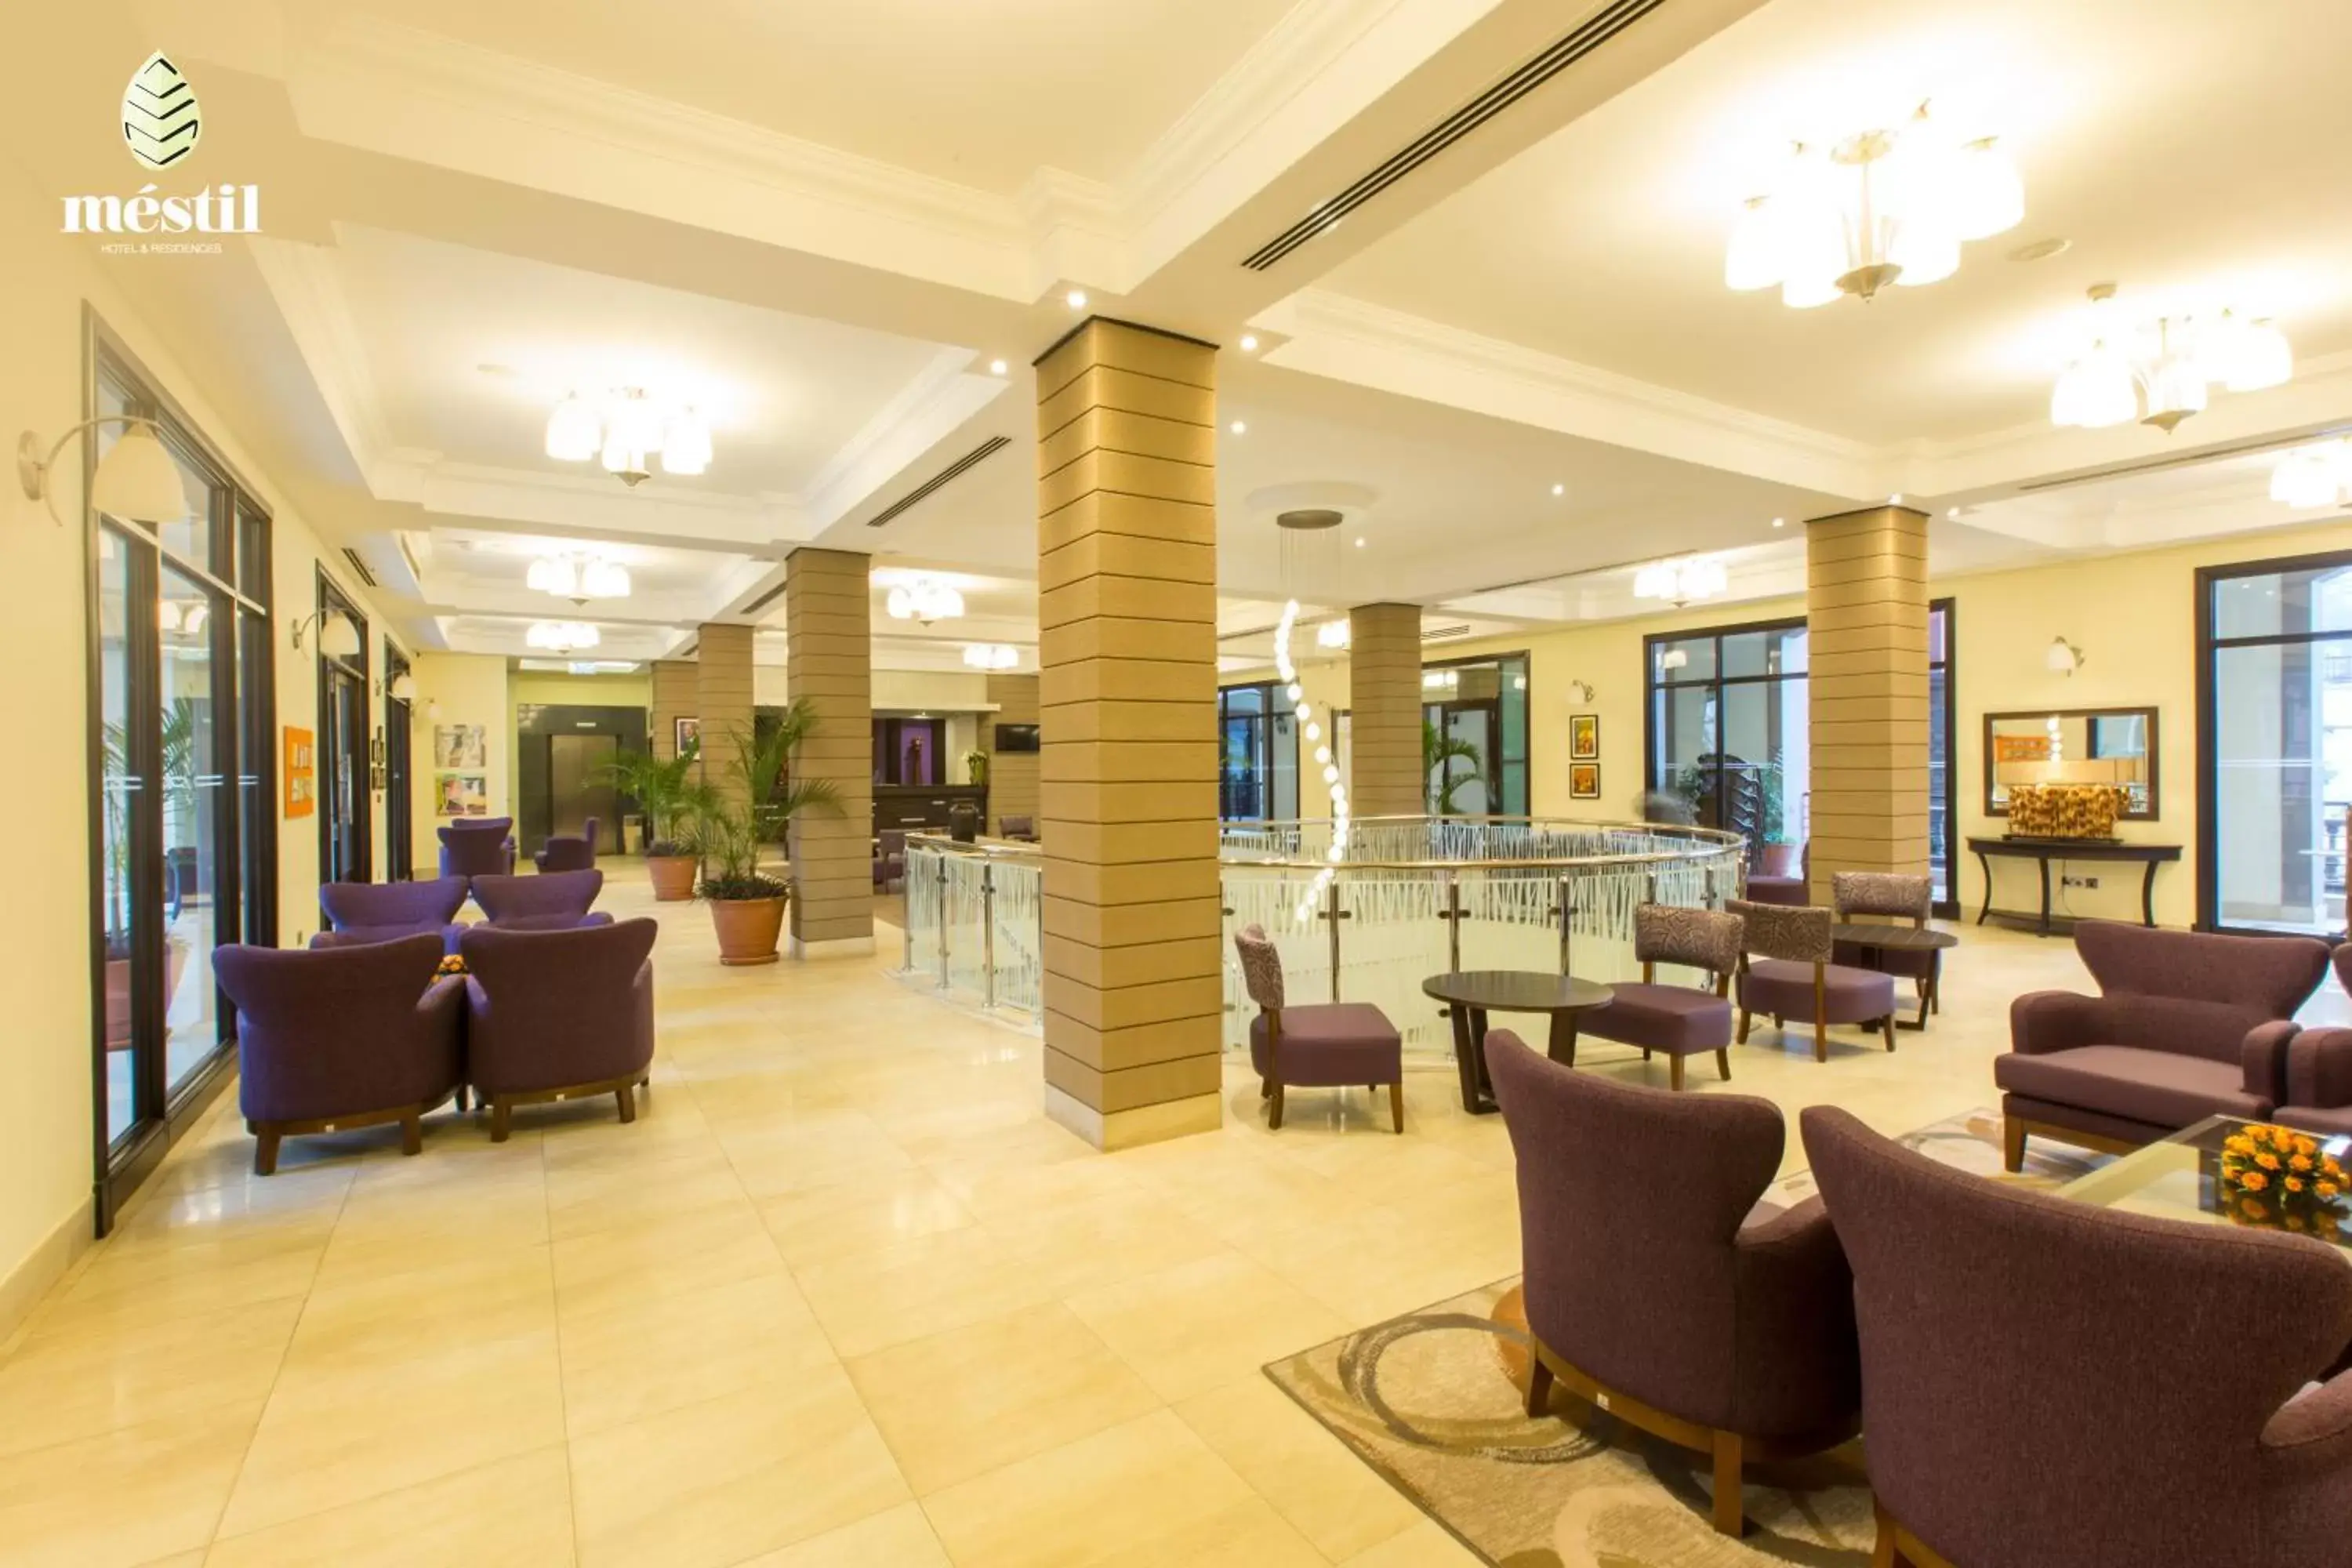 Lobby or reception in Mestil Hotel & Residences